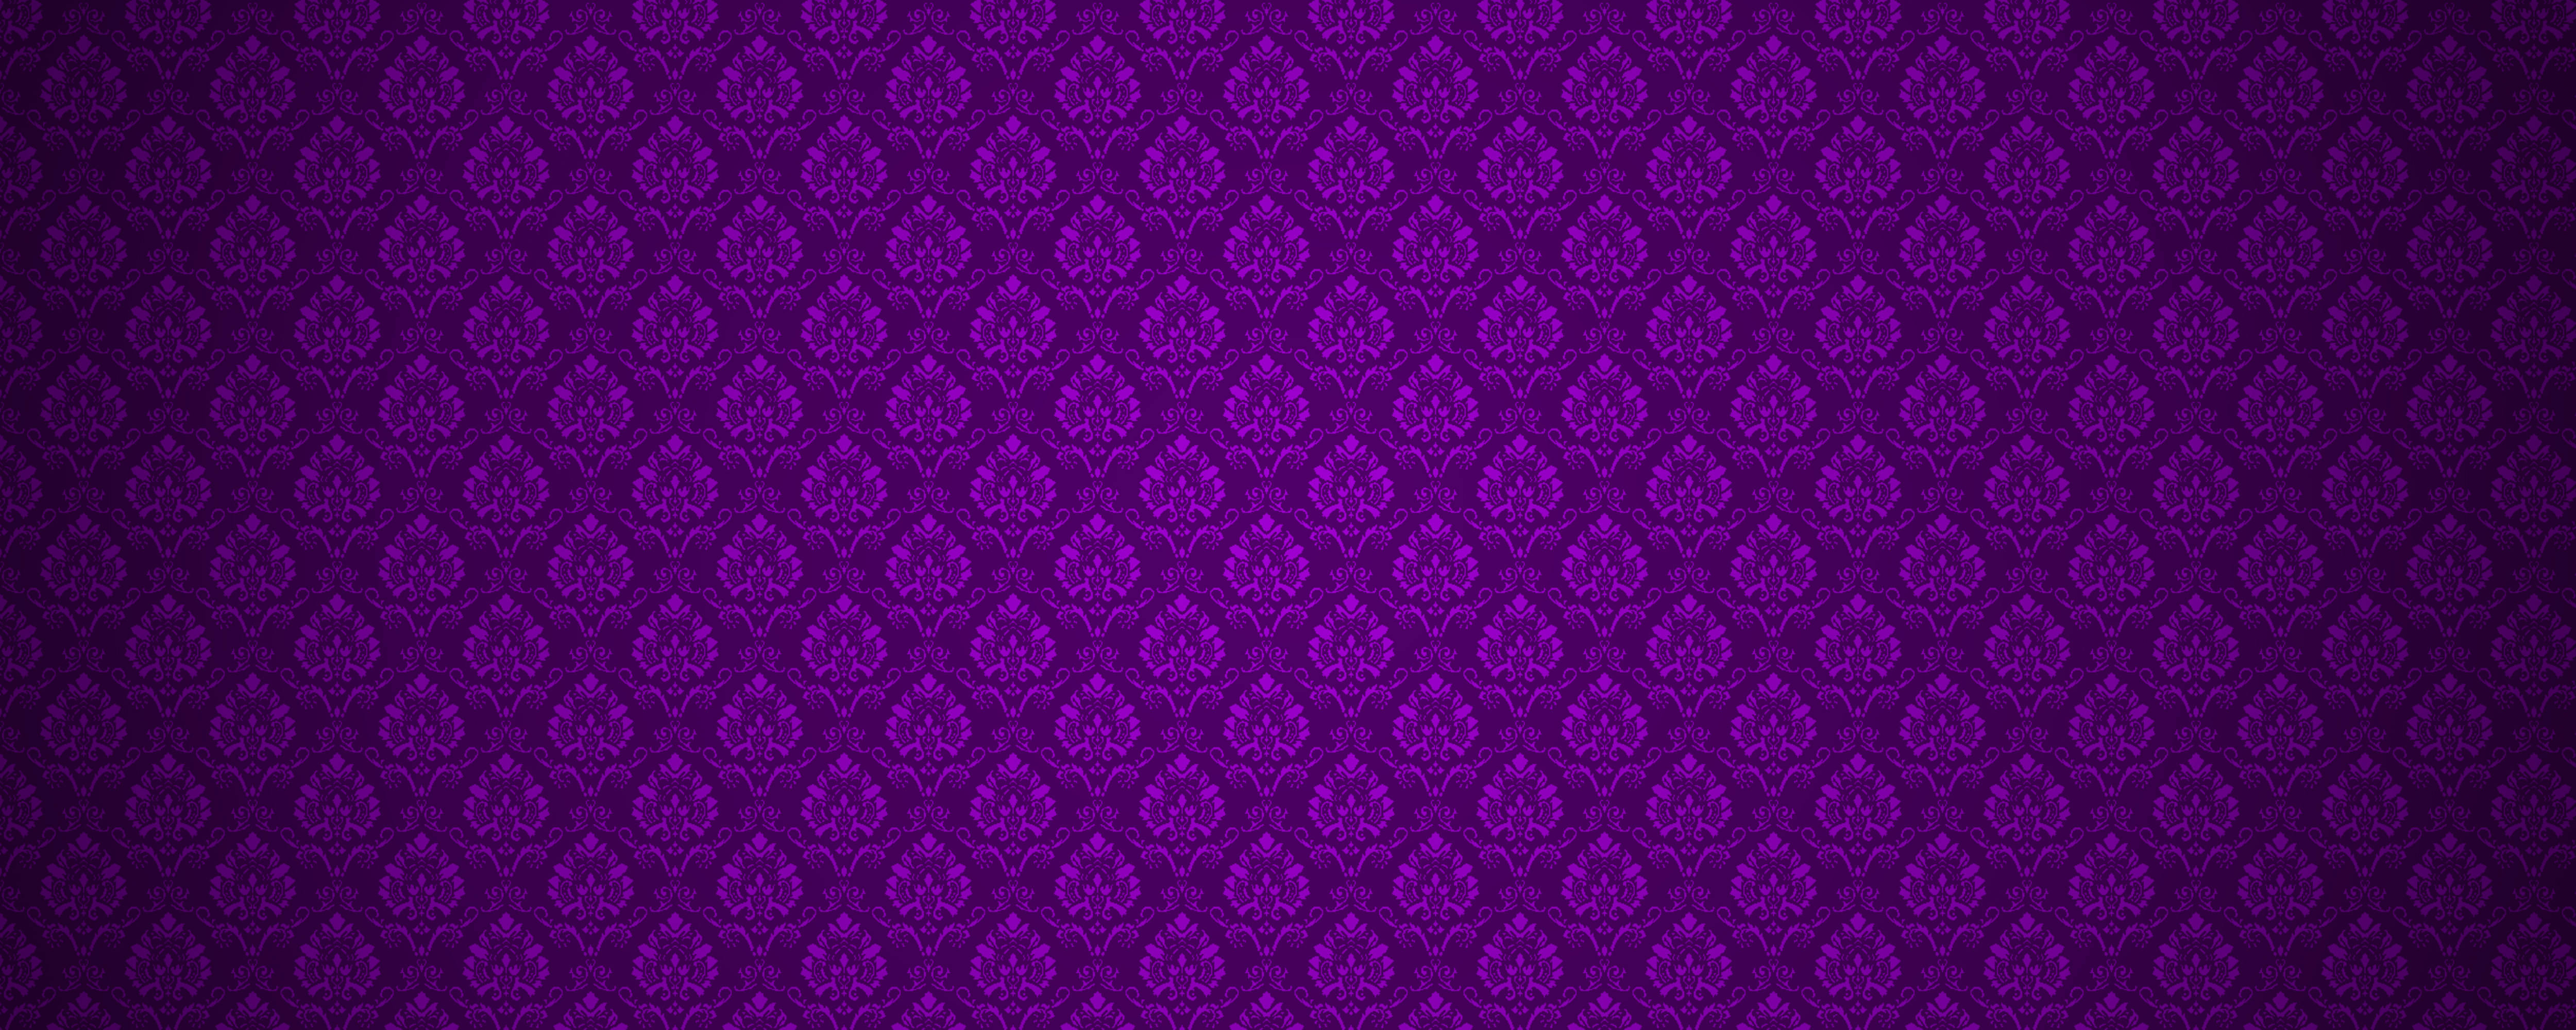 Purple wallpaper background